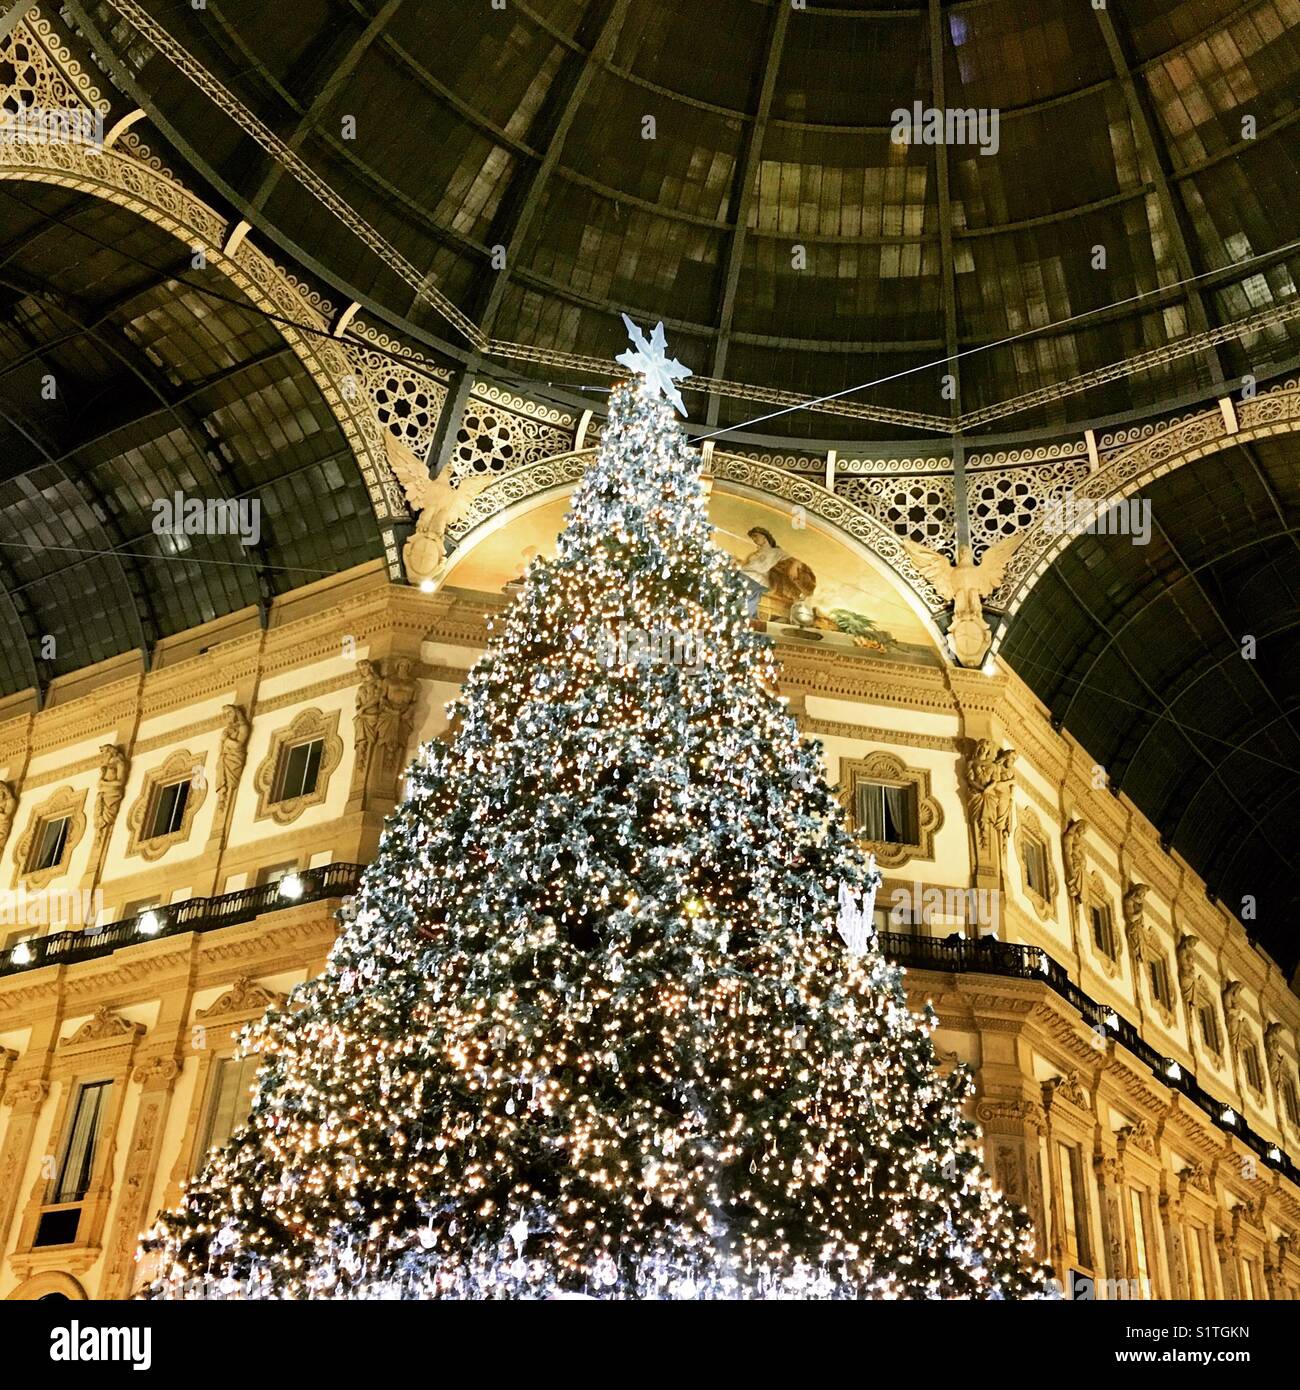 Beautiful lit up Christmas tree in Milan's Galleria Vittorio Emanuele II at night Stock Photo